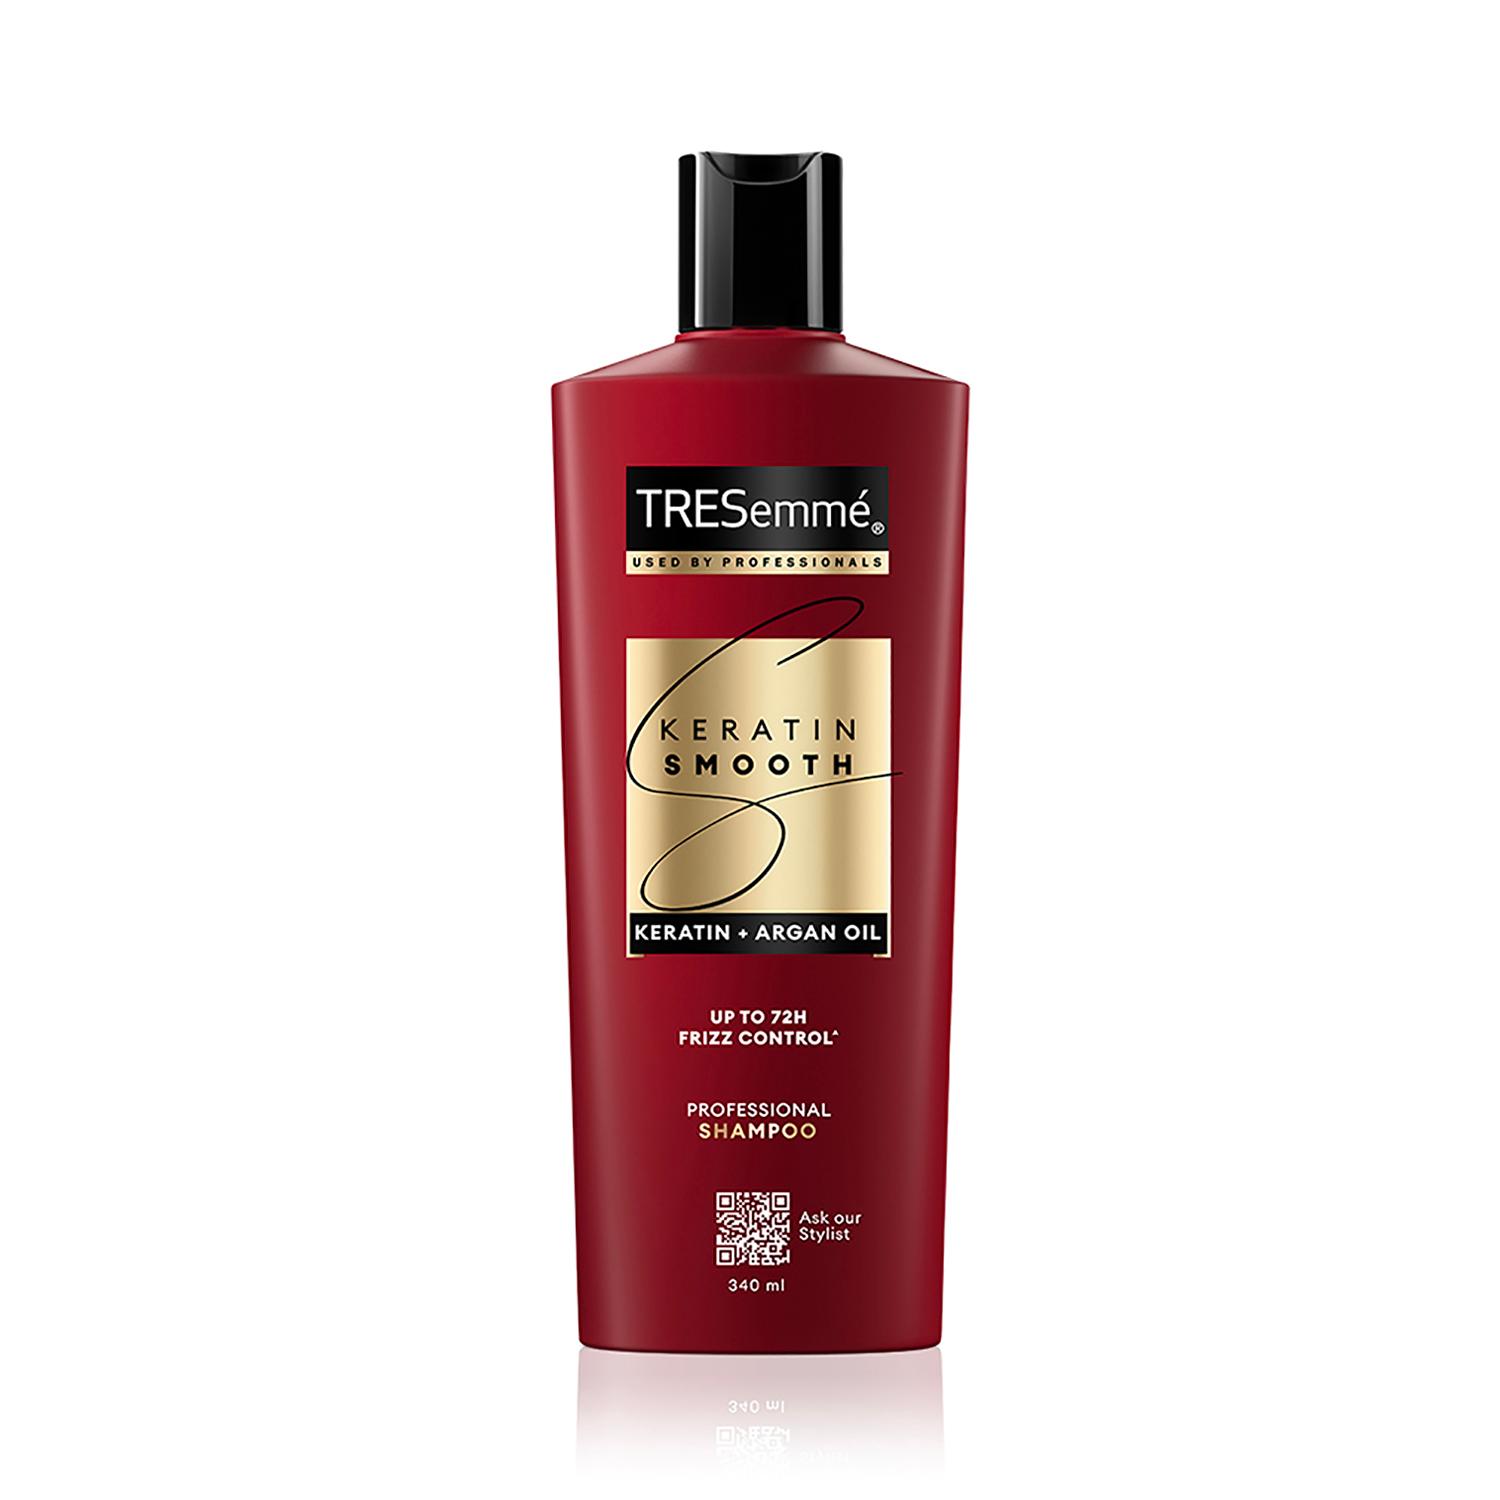 Tresemme | TRESemme Keratin Smooth Shampoo (340 ml)